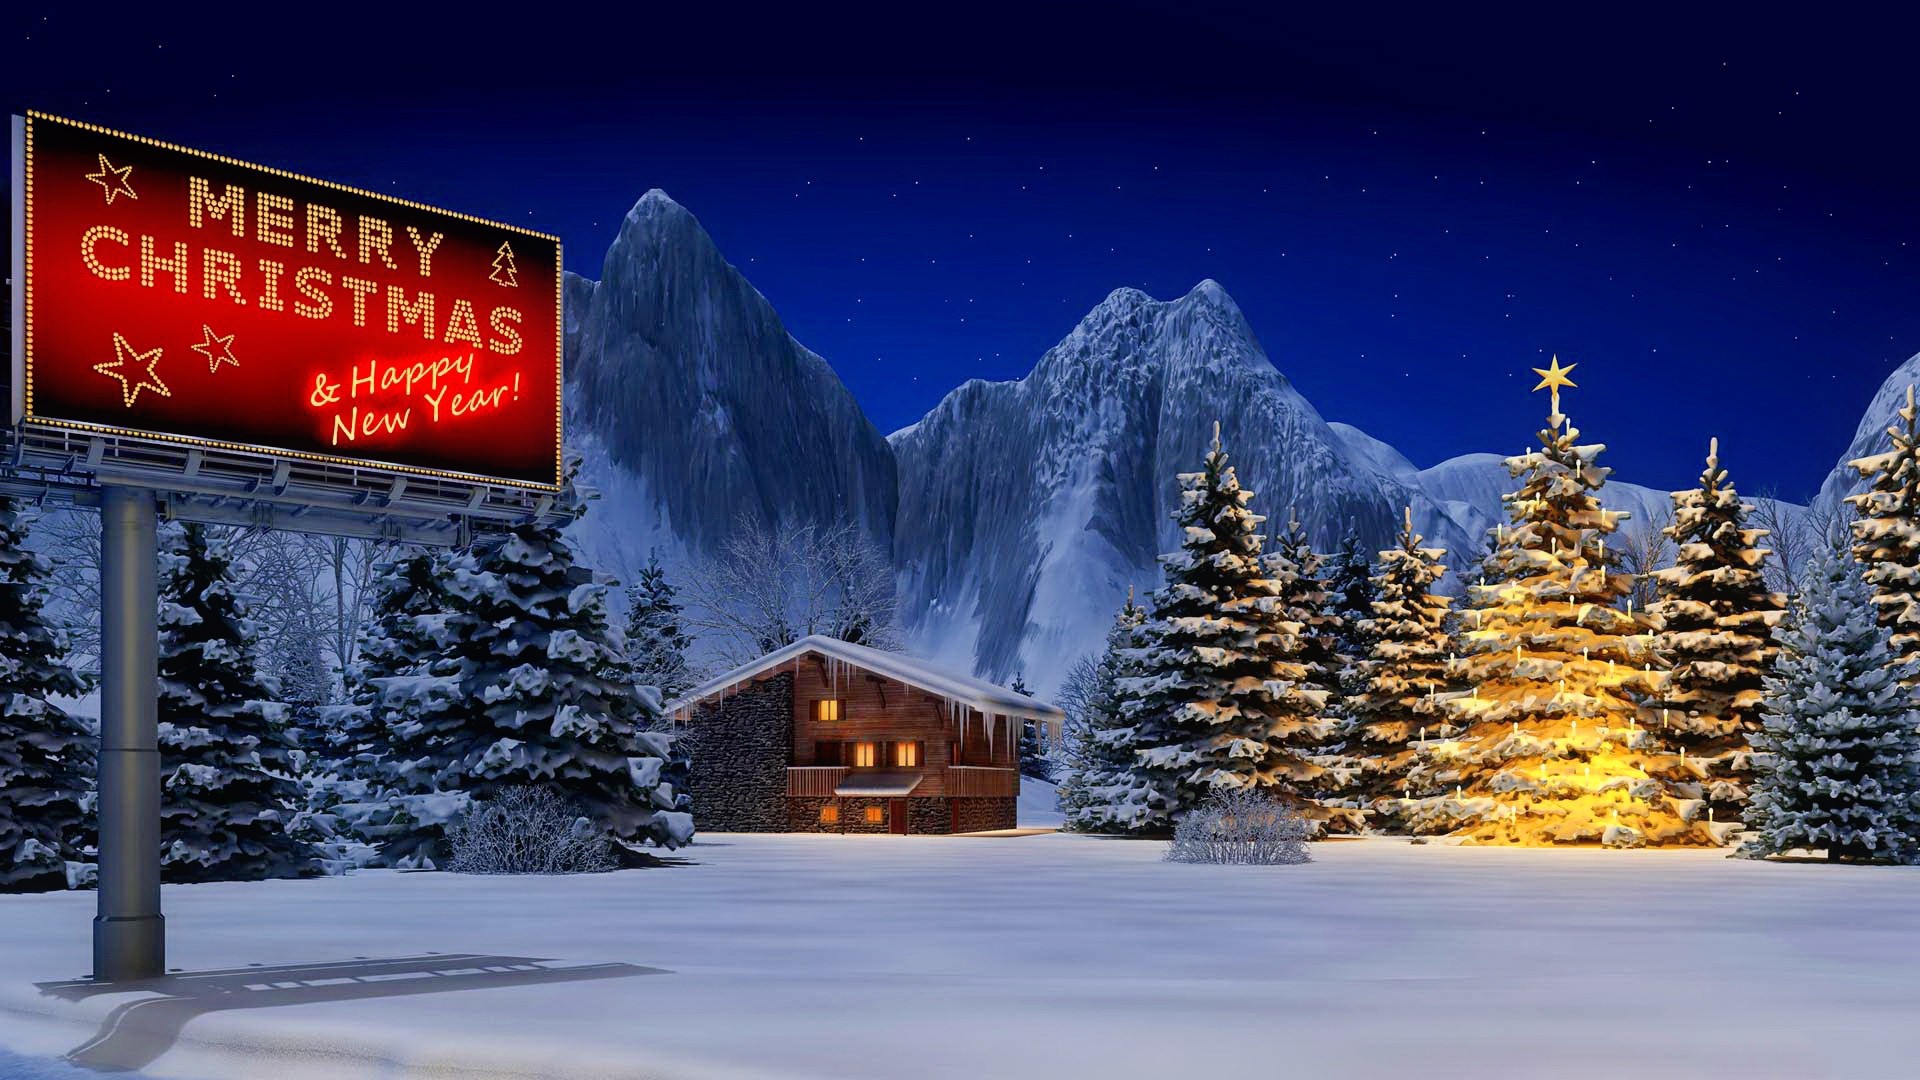 General 1920x1080 fir-tree typography digital art Christmas Christmas tree snow mountains sign house